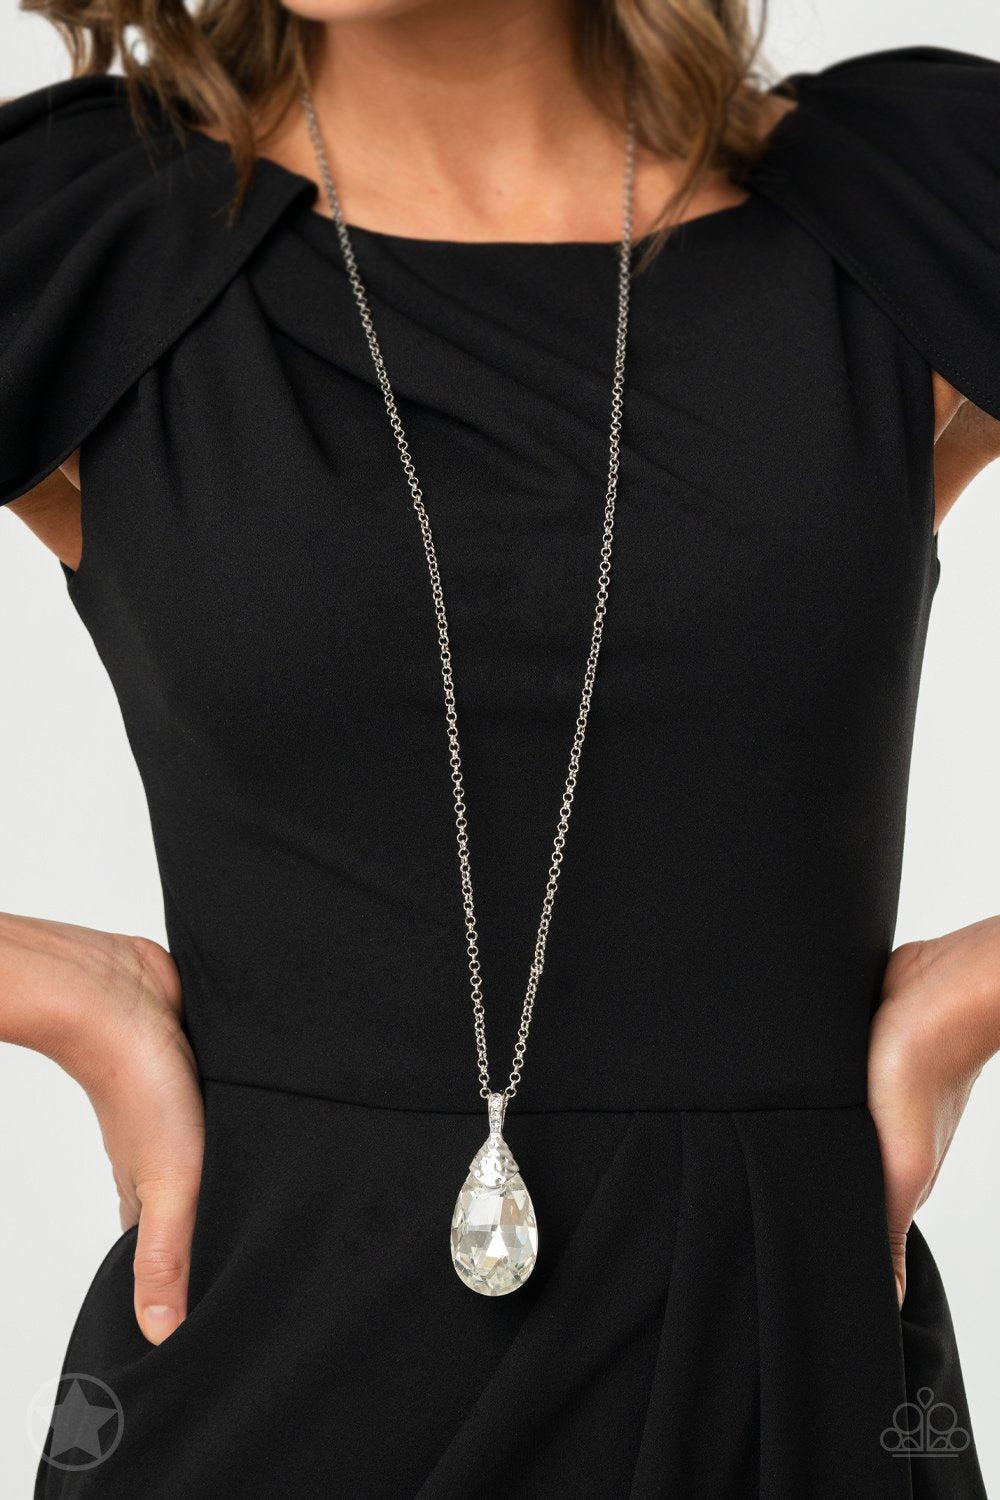 Spellbinding Sparkle White Rhinestone Necklace - Paparazzi Accessories - lightbox -CarasShop.com - $5 Jewelry by Cara Jewels